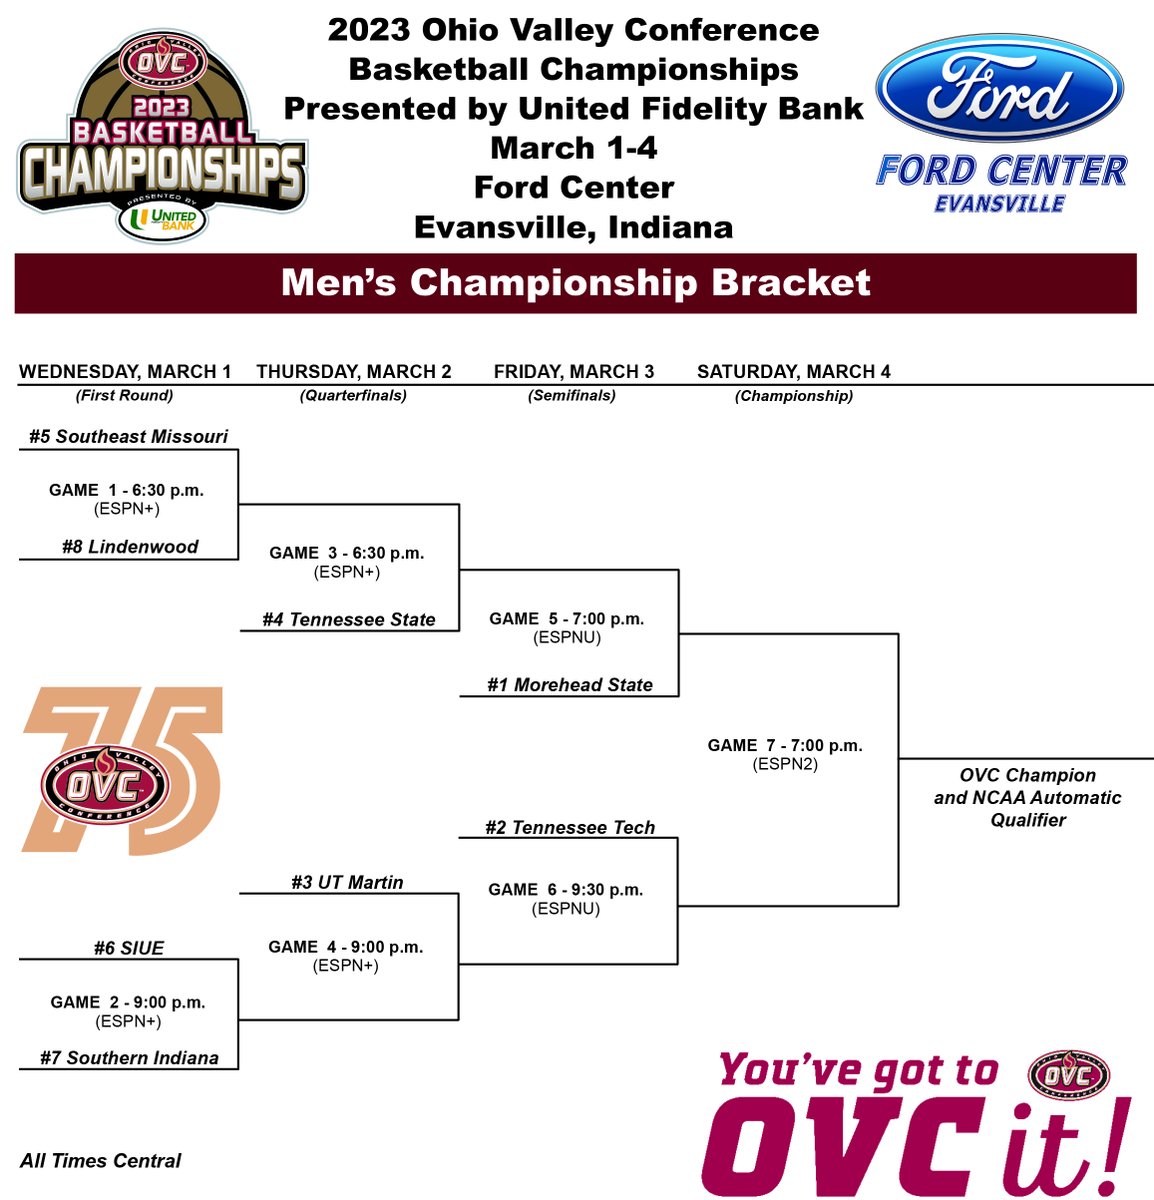 2023 OVC Tournament Bracket r/CollegeBasketball